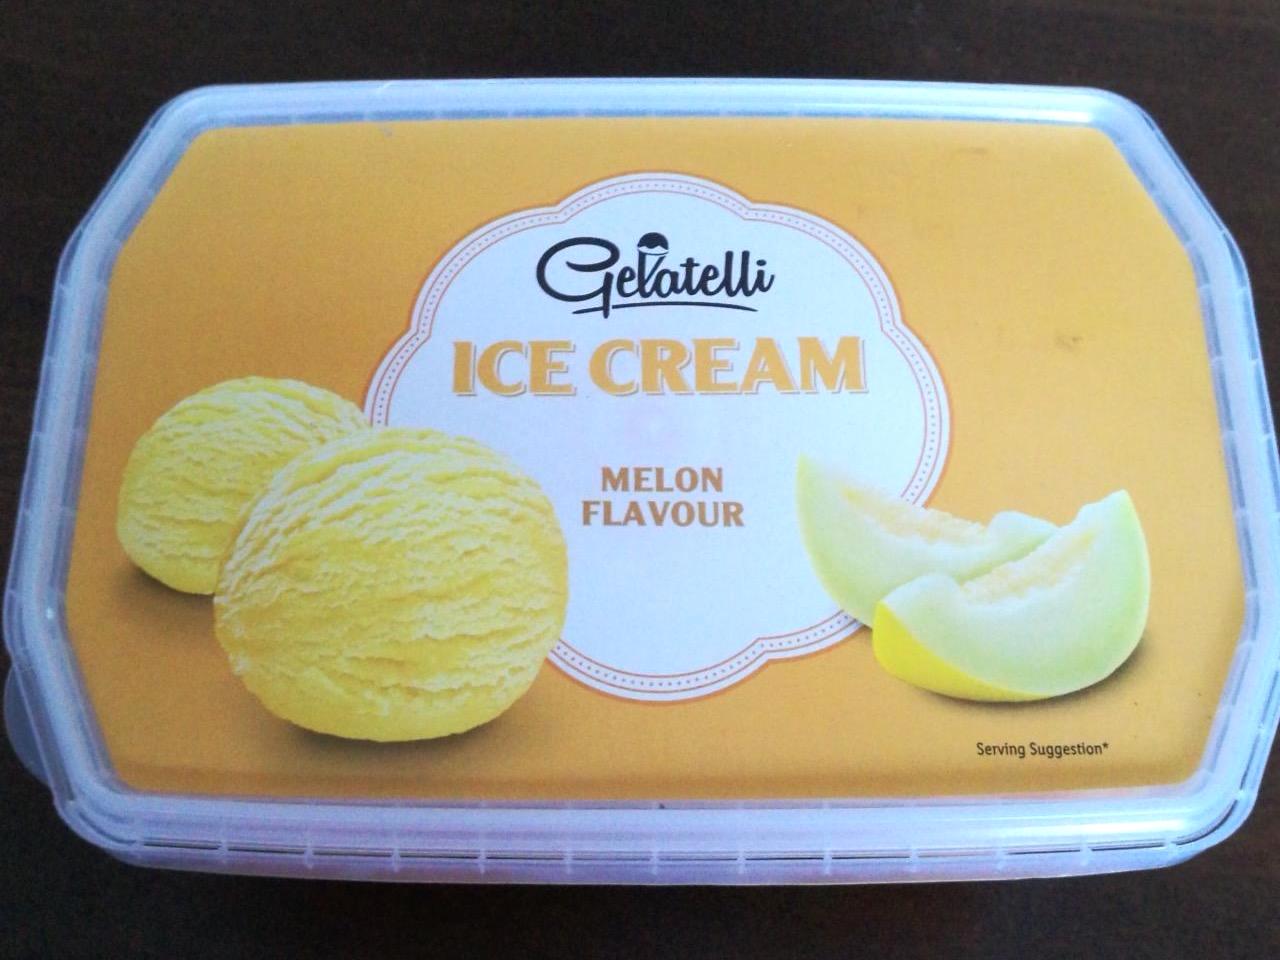 Képek - Ice cream Melon flavour Gelatelli